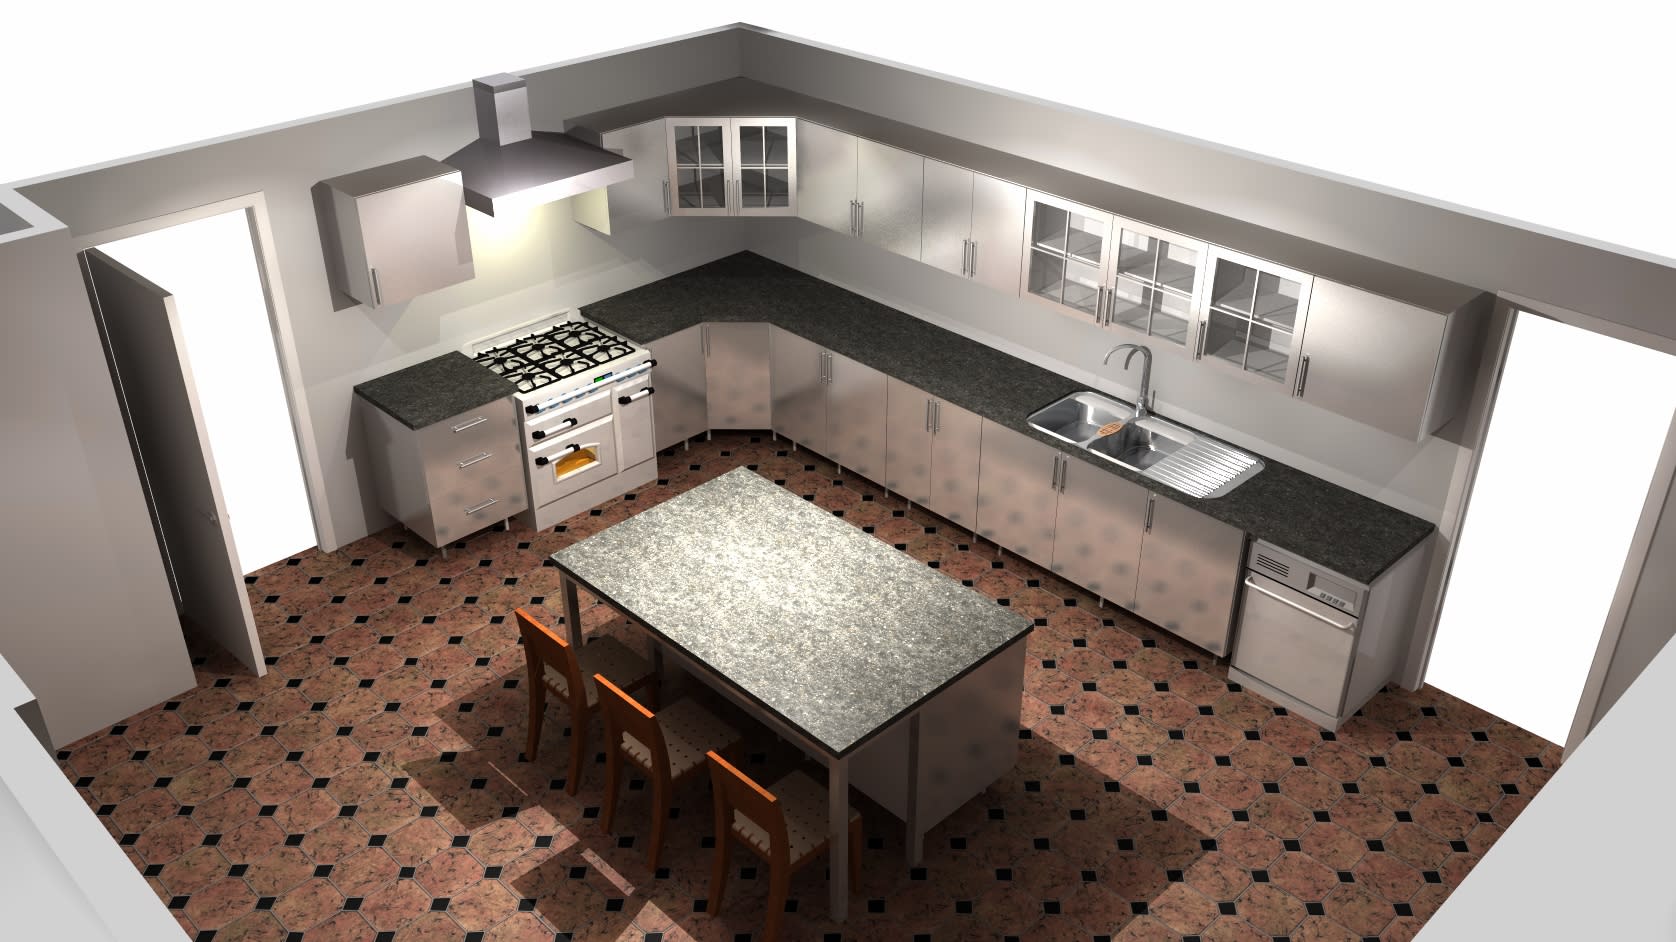 Do 3d Kitchen Design In 2020 By Sheronrex Fiverr